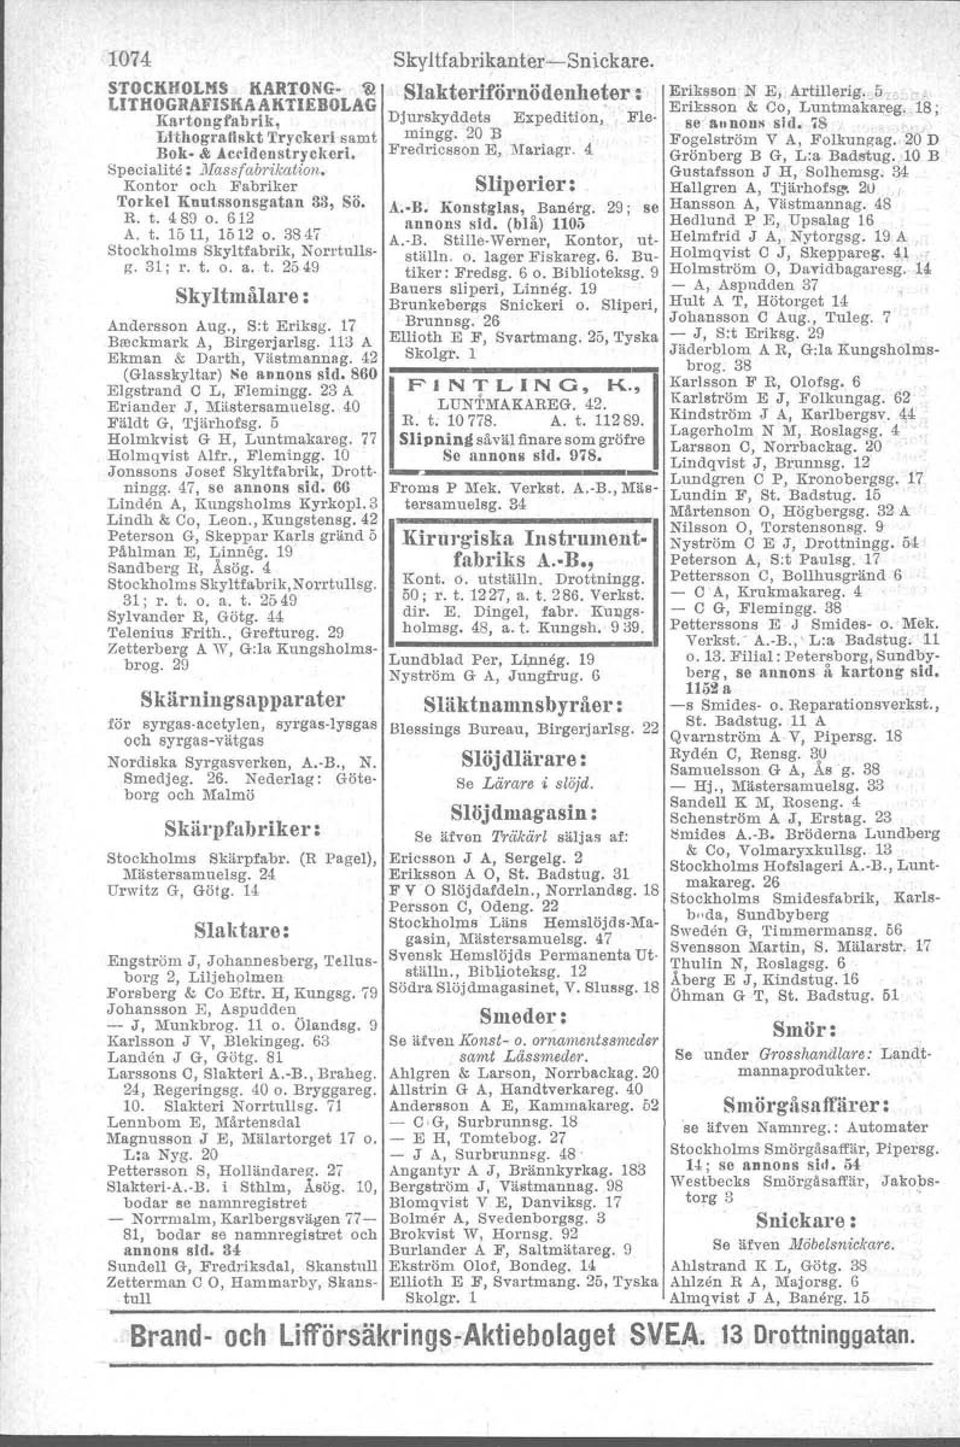 17 Beeckmark A, Birgerjarlsg. 113 A Ekman & Darth, Västmannag. 42, (Glasskyltar) Se annons sid. S60 Elgstrand C L, Flemingg. 23 A Eriander J, Mästersamuelsg. 40 Fäldt G, Tjärhofsg.